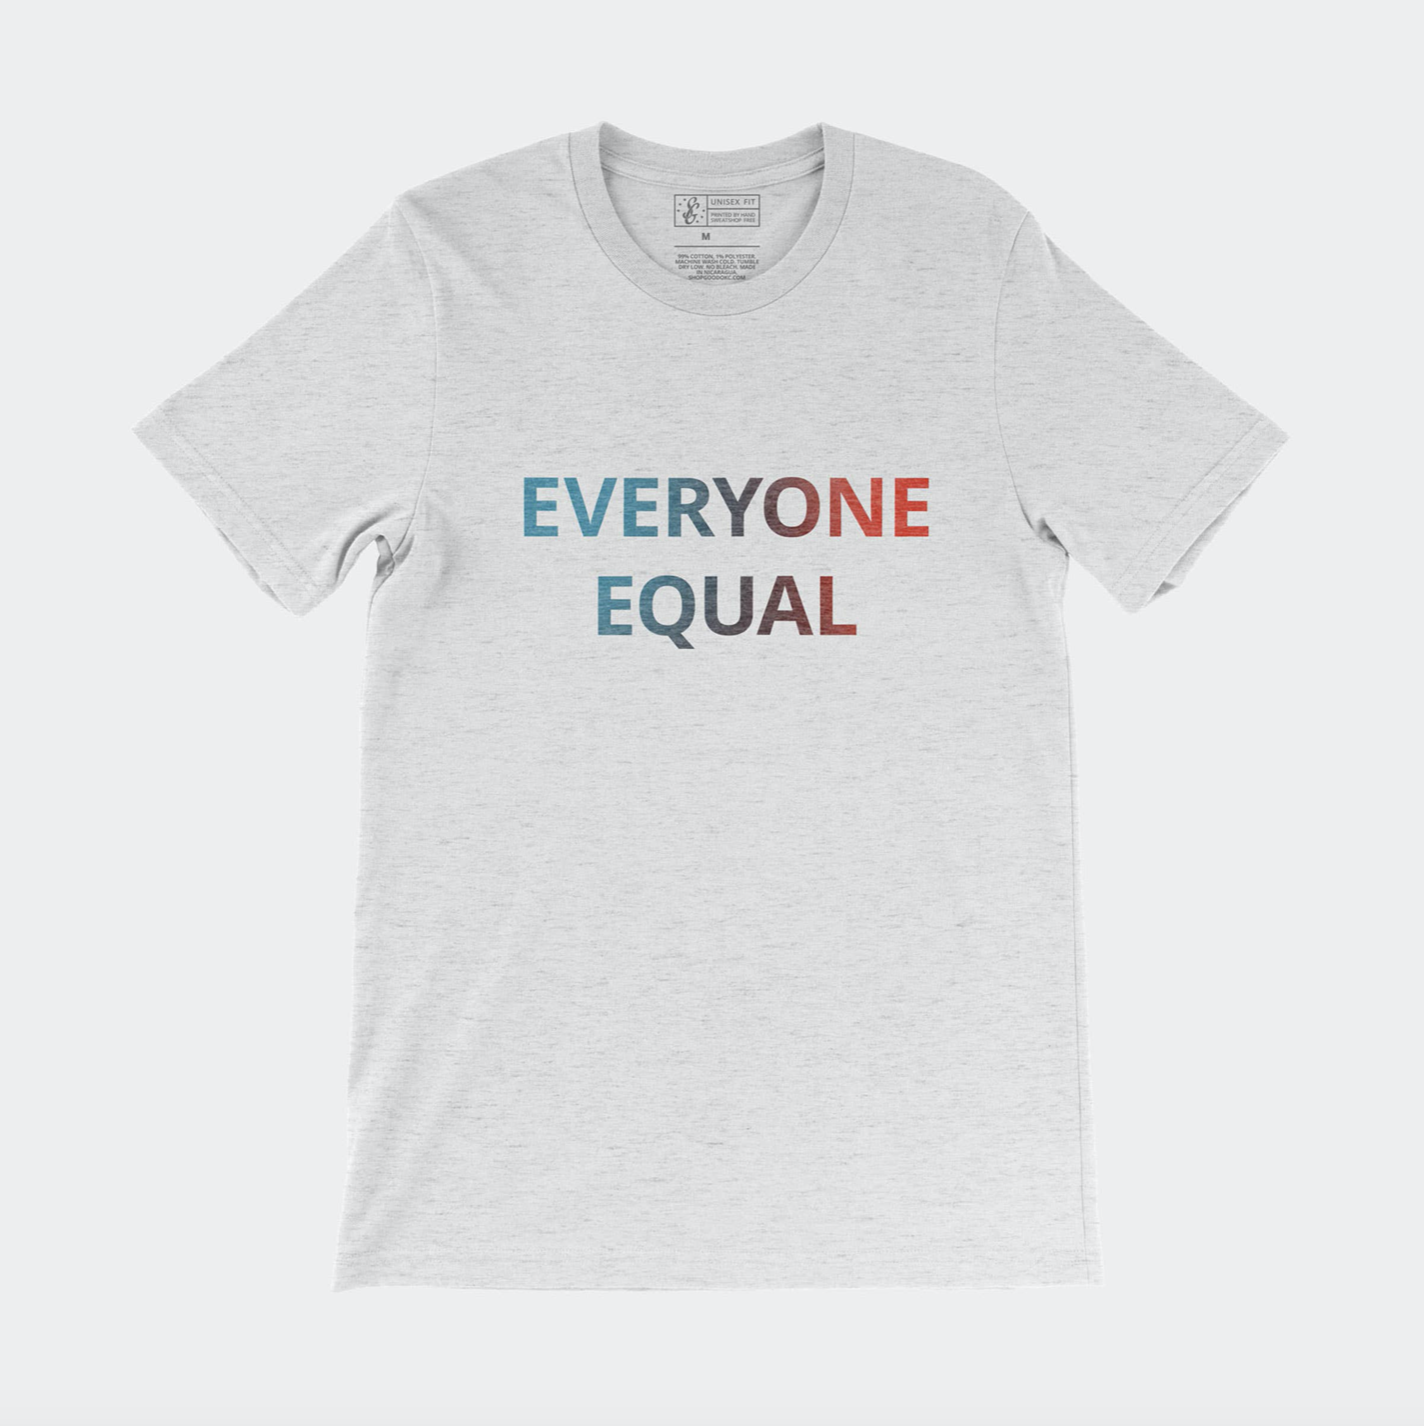 Everyone Equal Tee